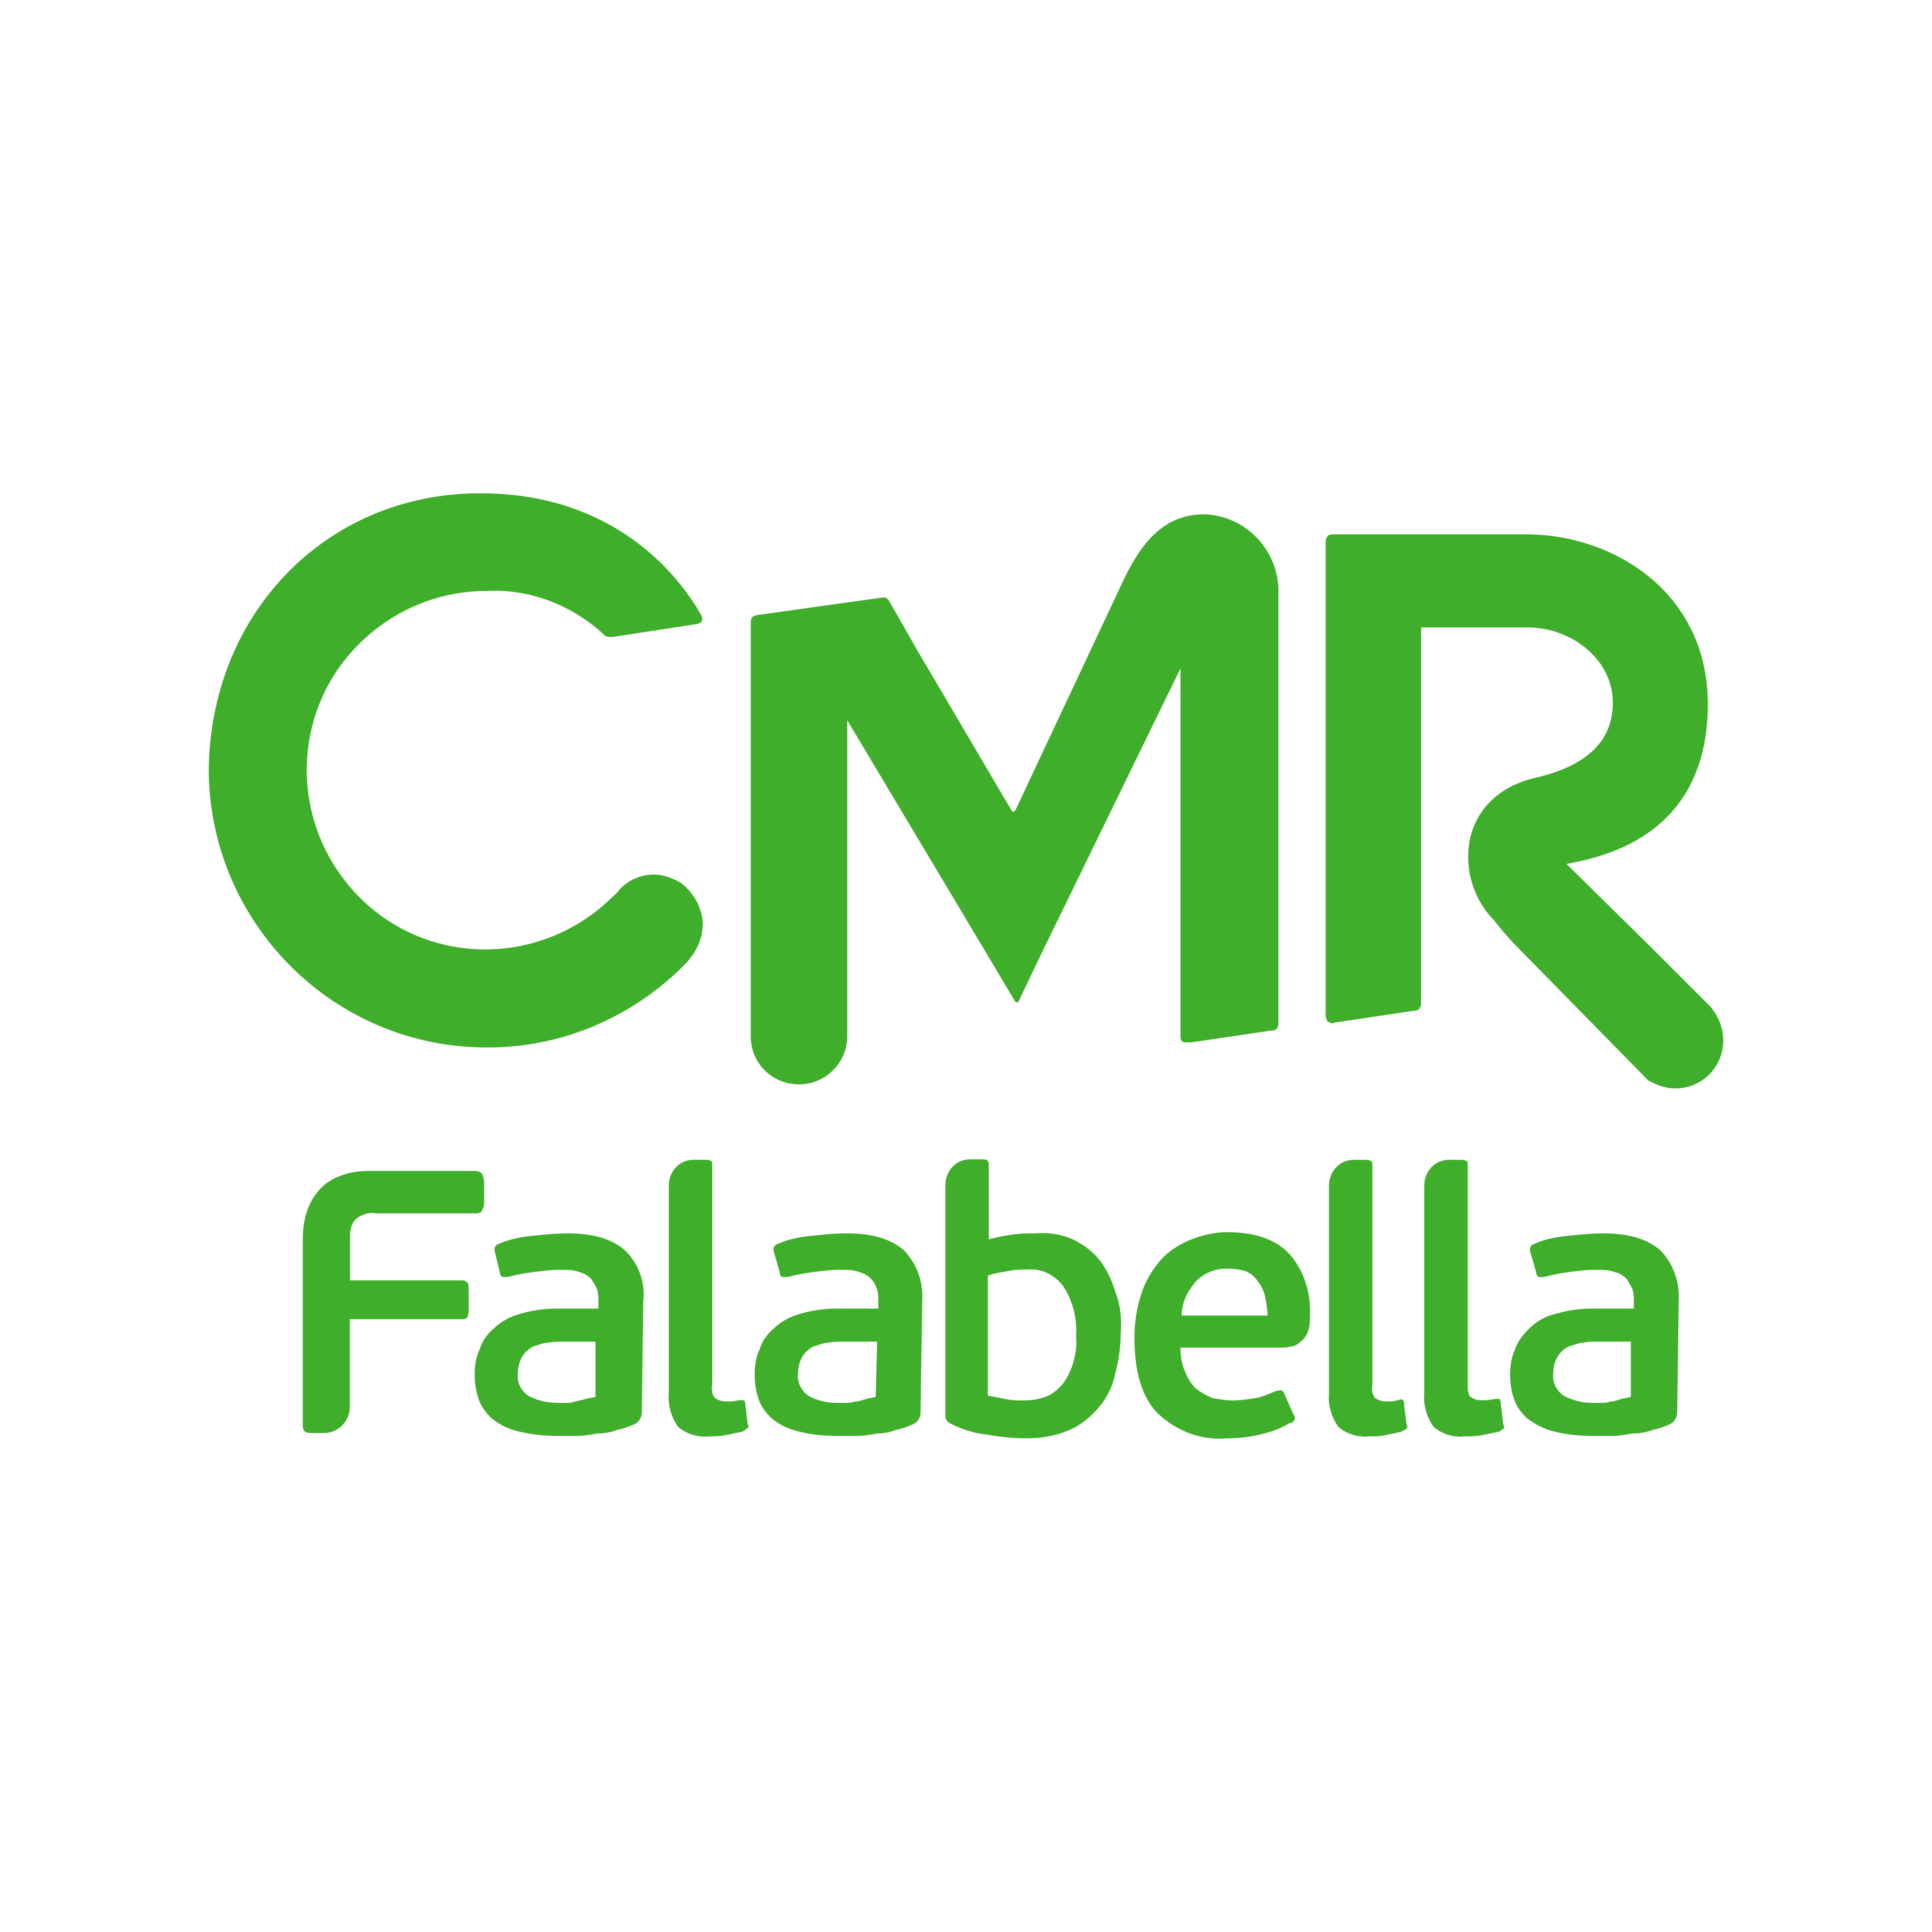 CMR Falabella Logo PNG.